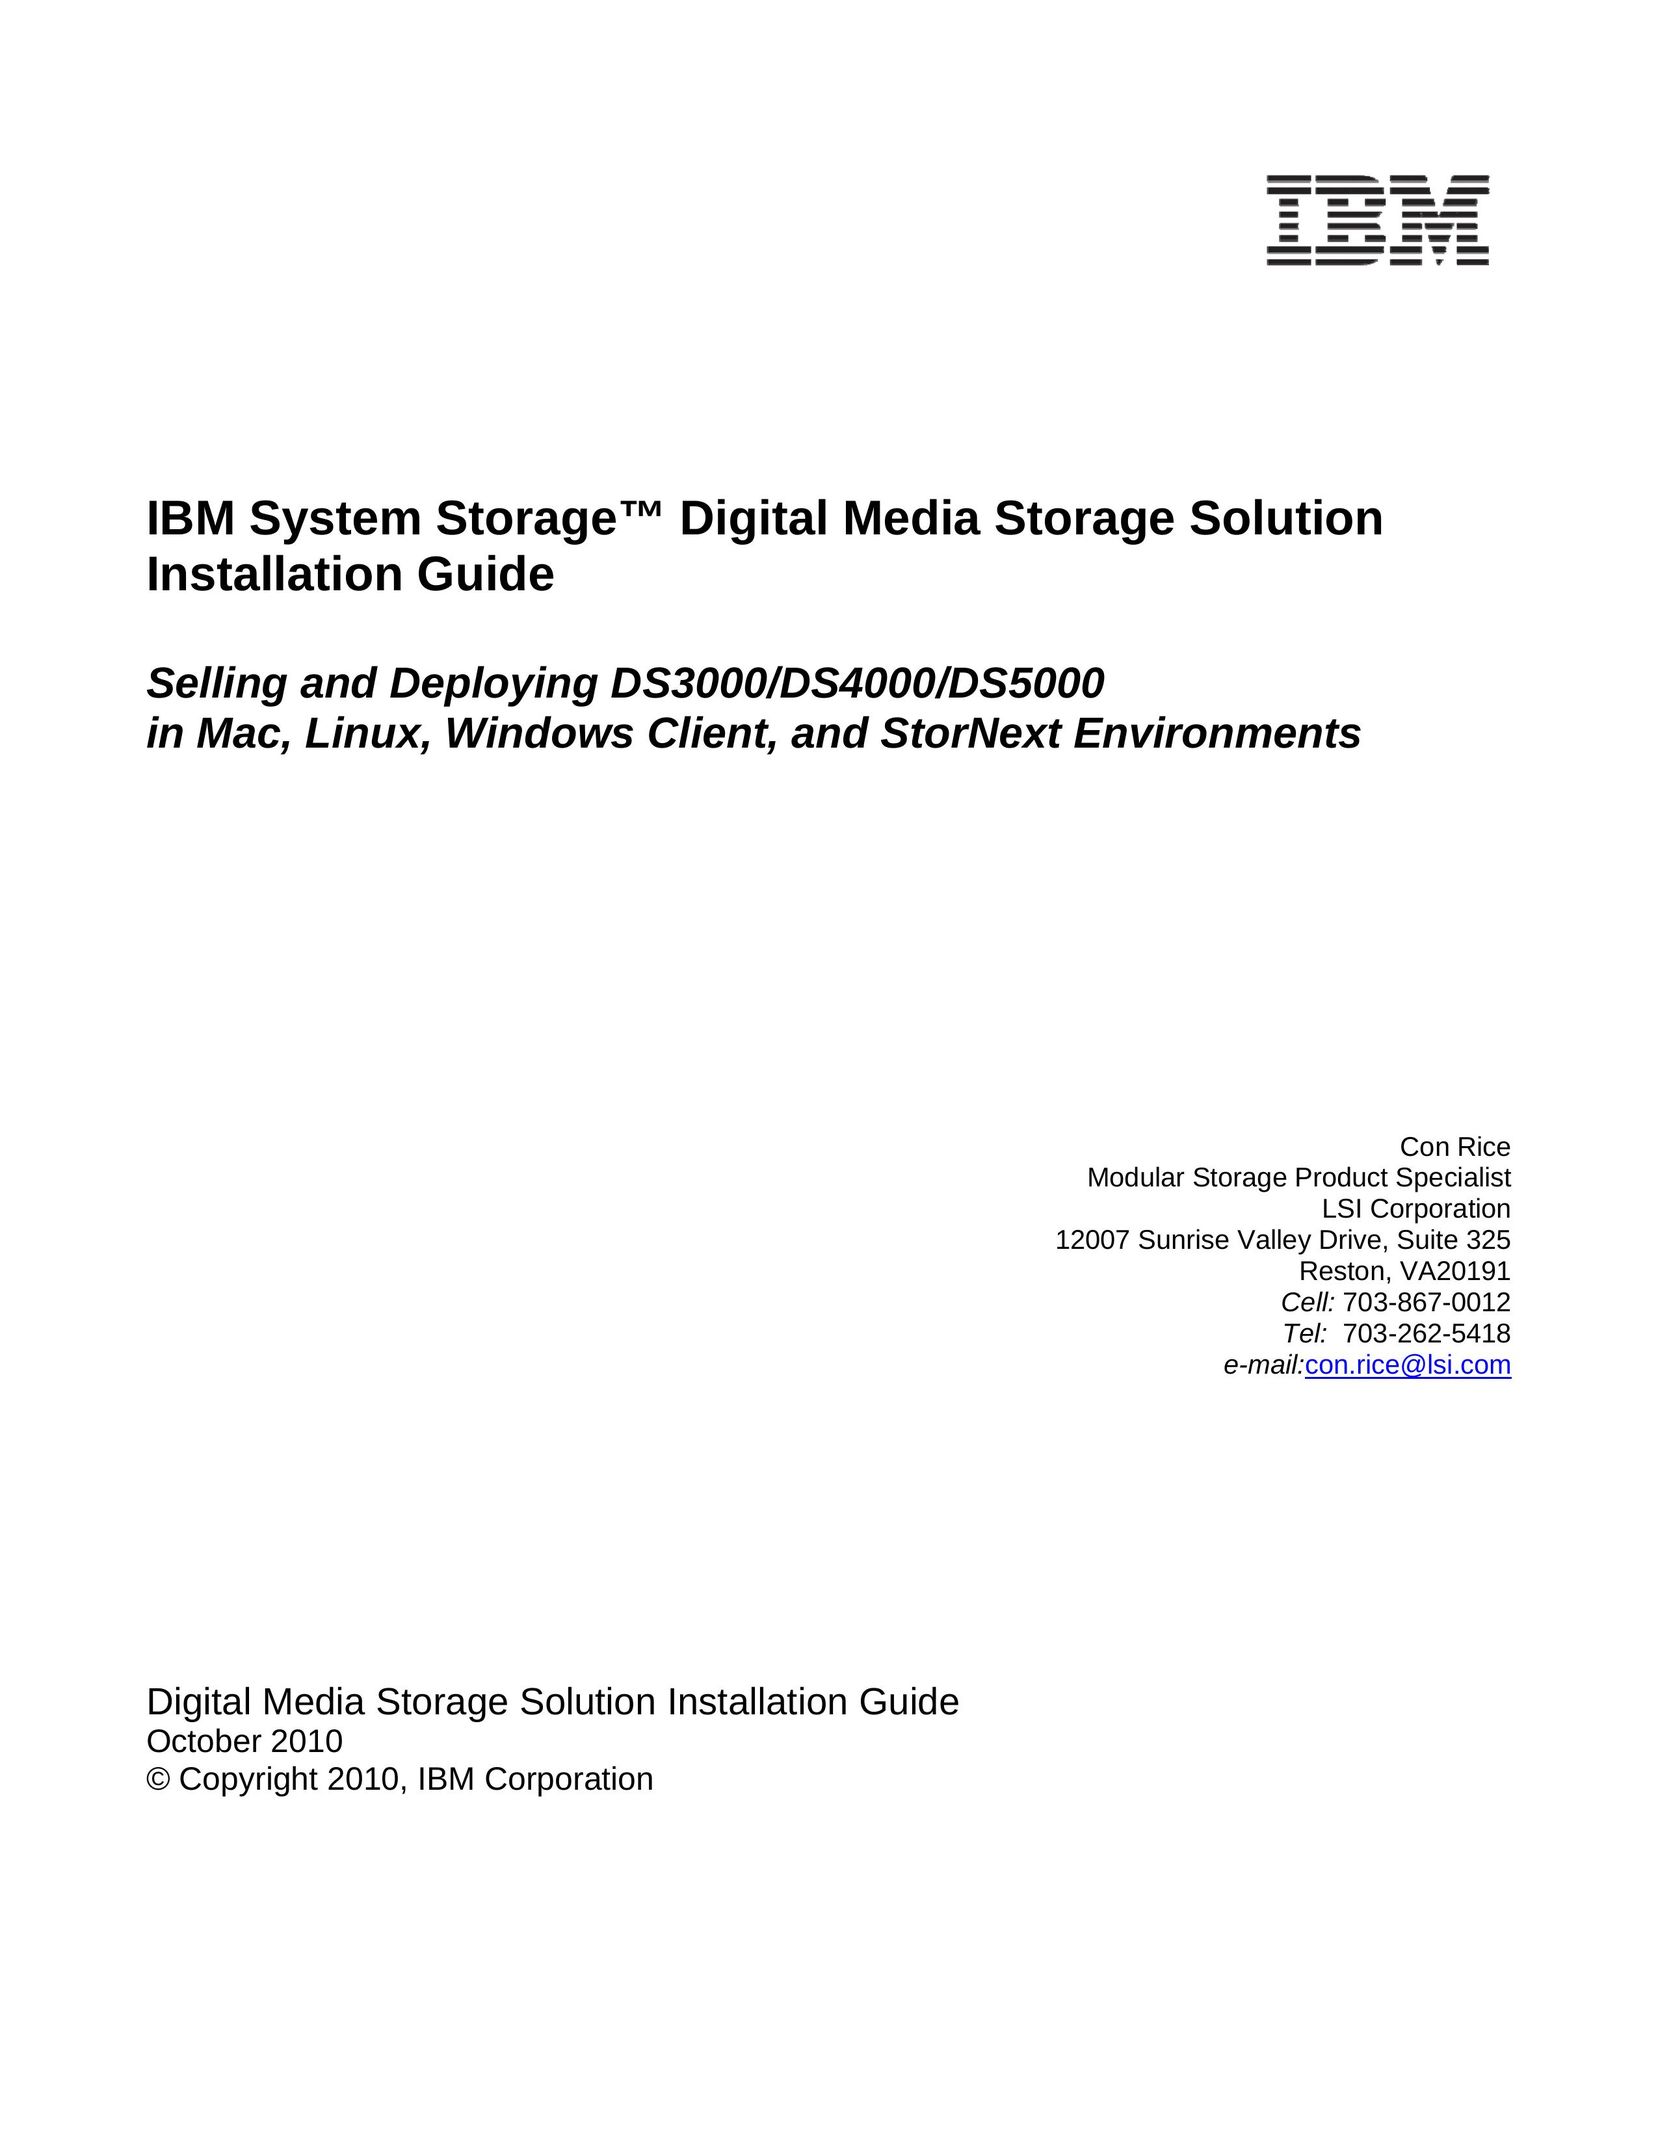 IBM DS4000 Portable Media Storage User Manual